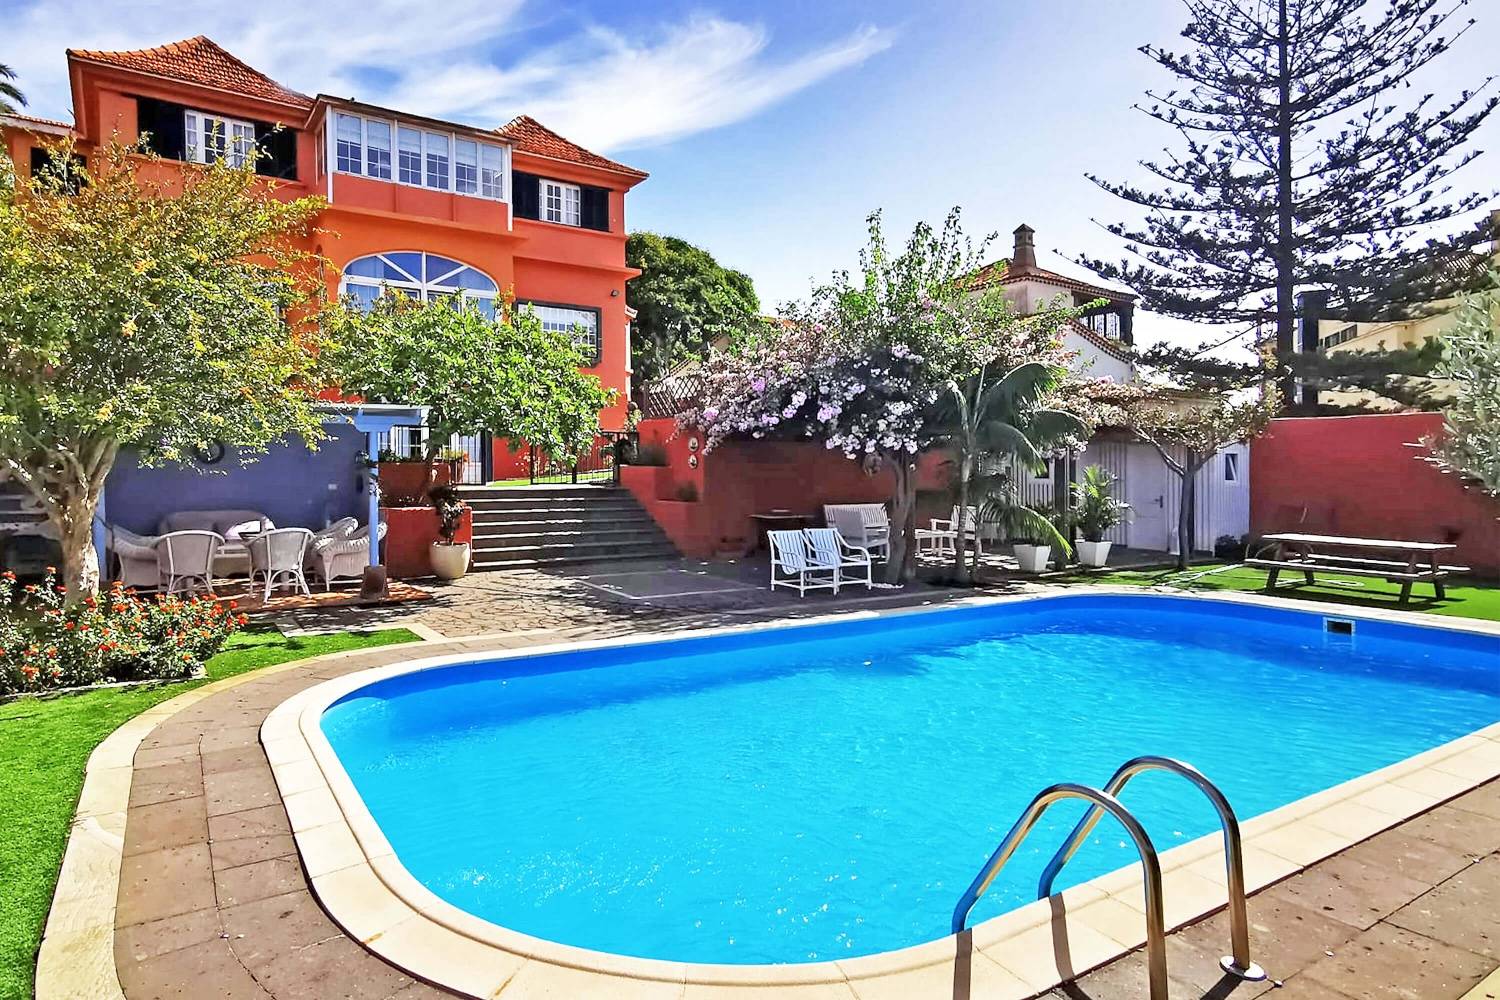 Skvělý samostatný apartmán se soukromým bazénem, ​​zahradou a grilem v Santa Brígidě na severu Gran Canaria.